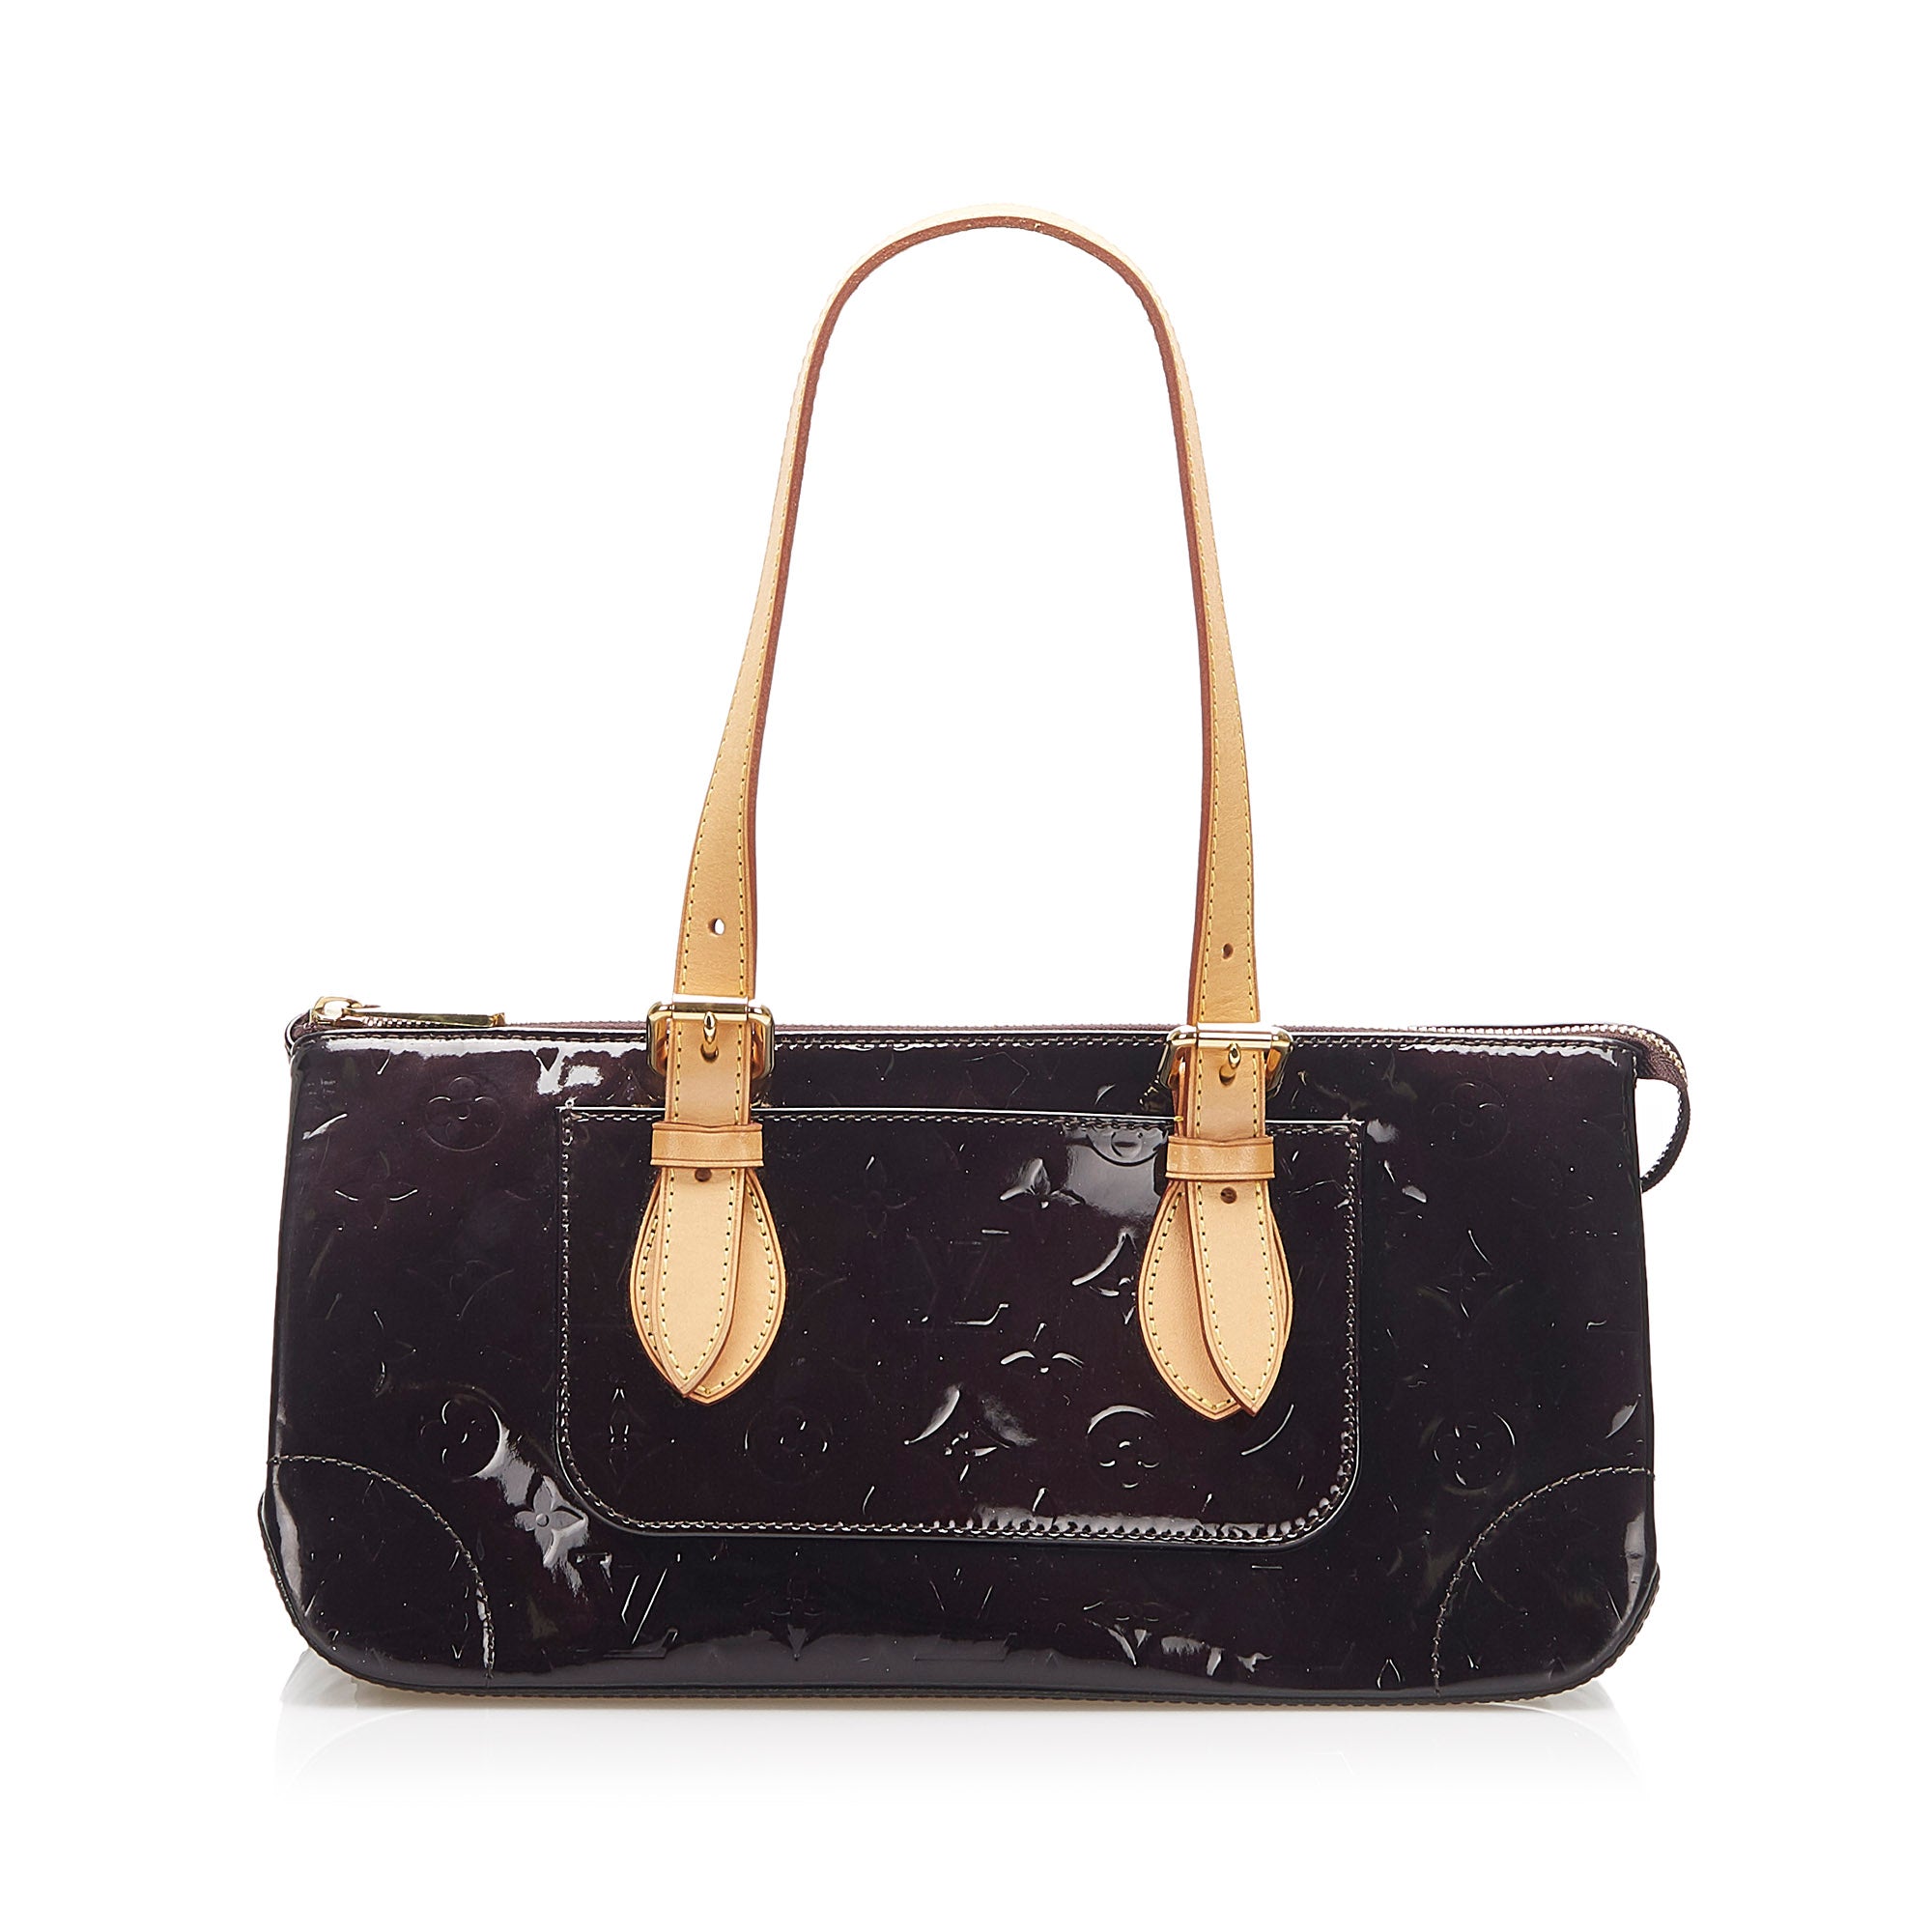 Authentic Louis Vuitton Beige Monogram Vernis Leather Montebello mm Tote Bag